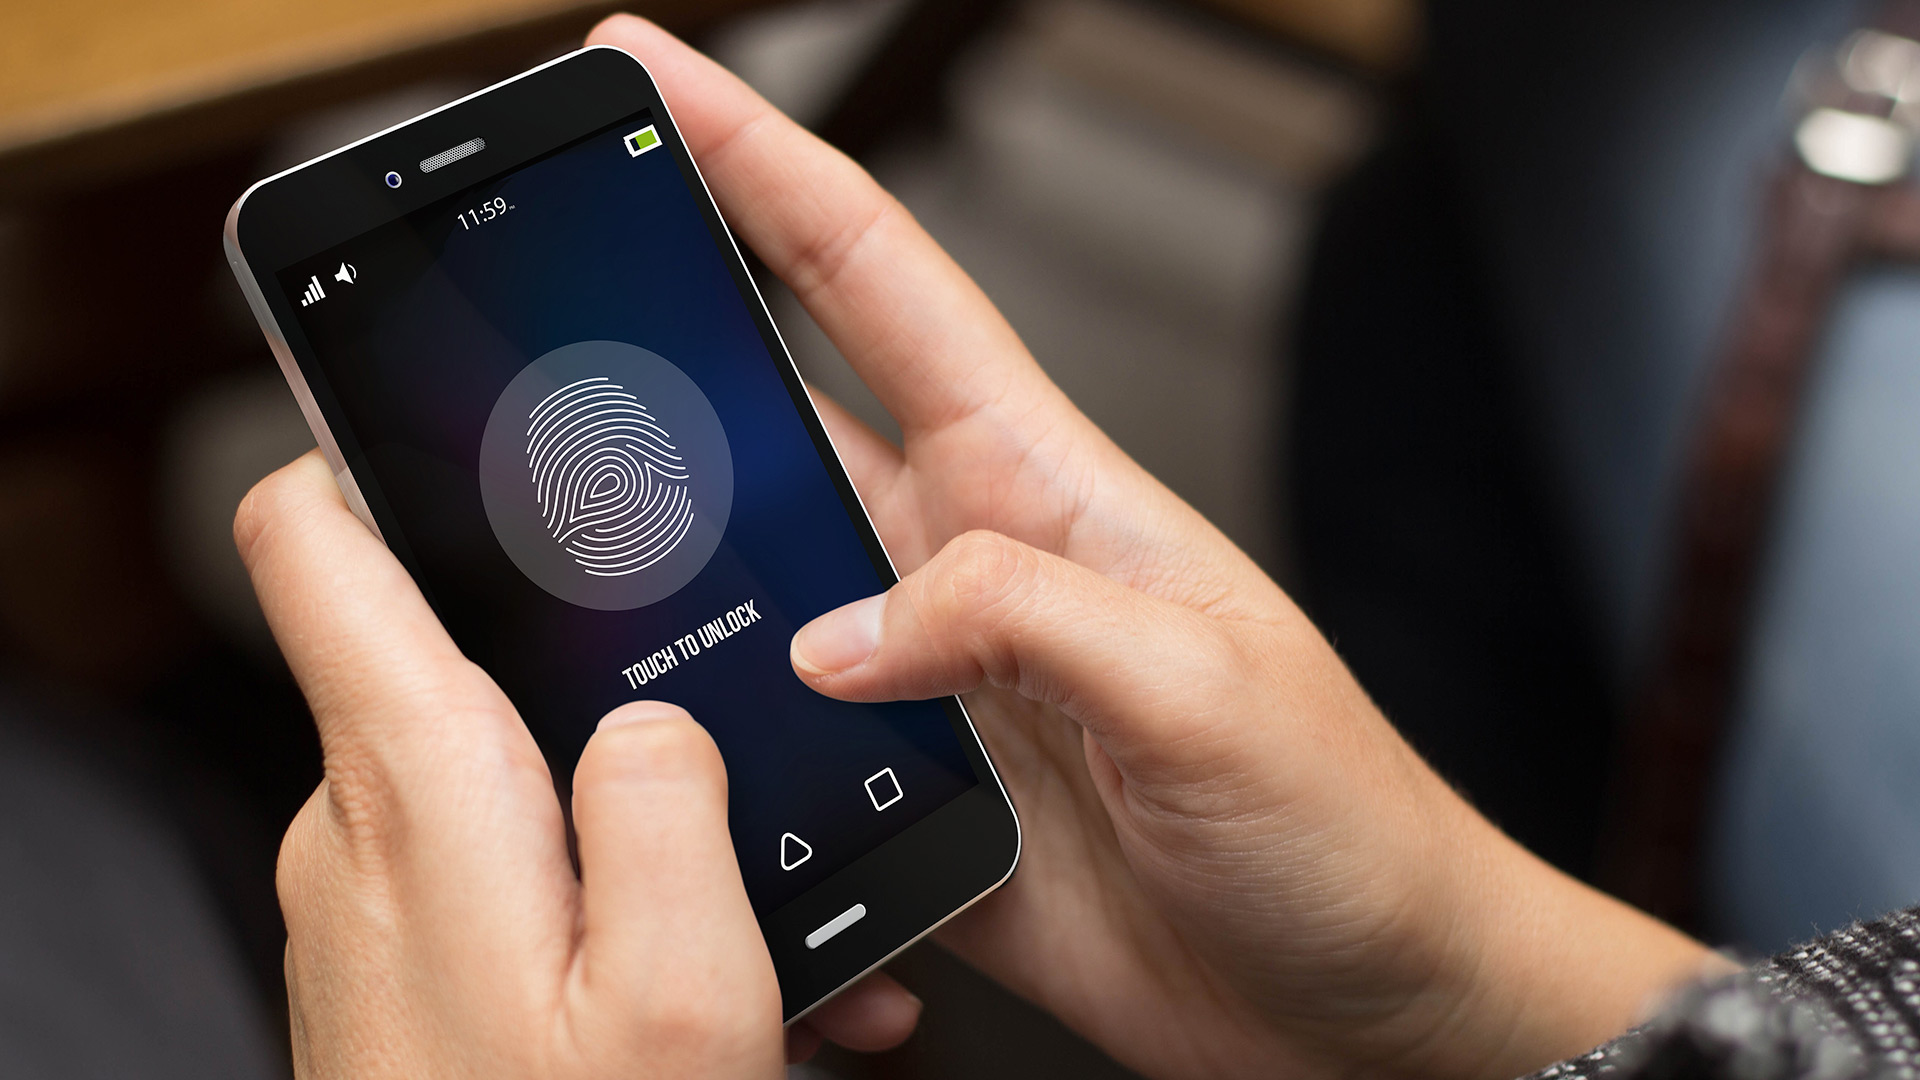 Cellphone in hands with fingerprint ID lock screen